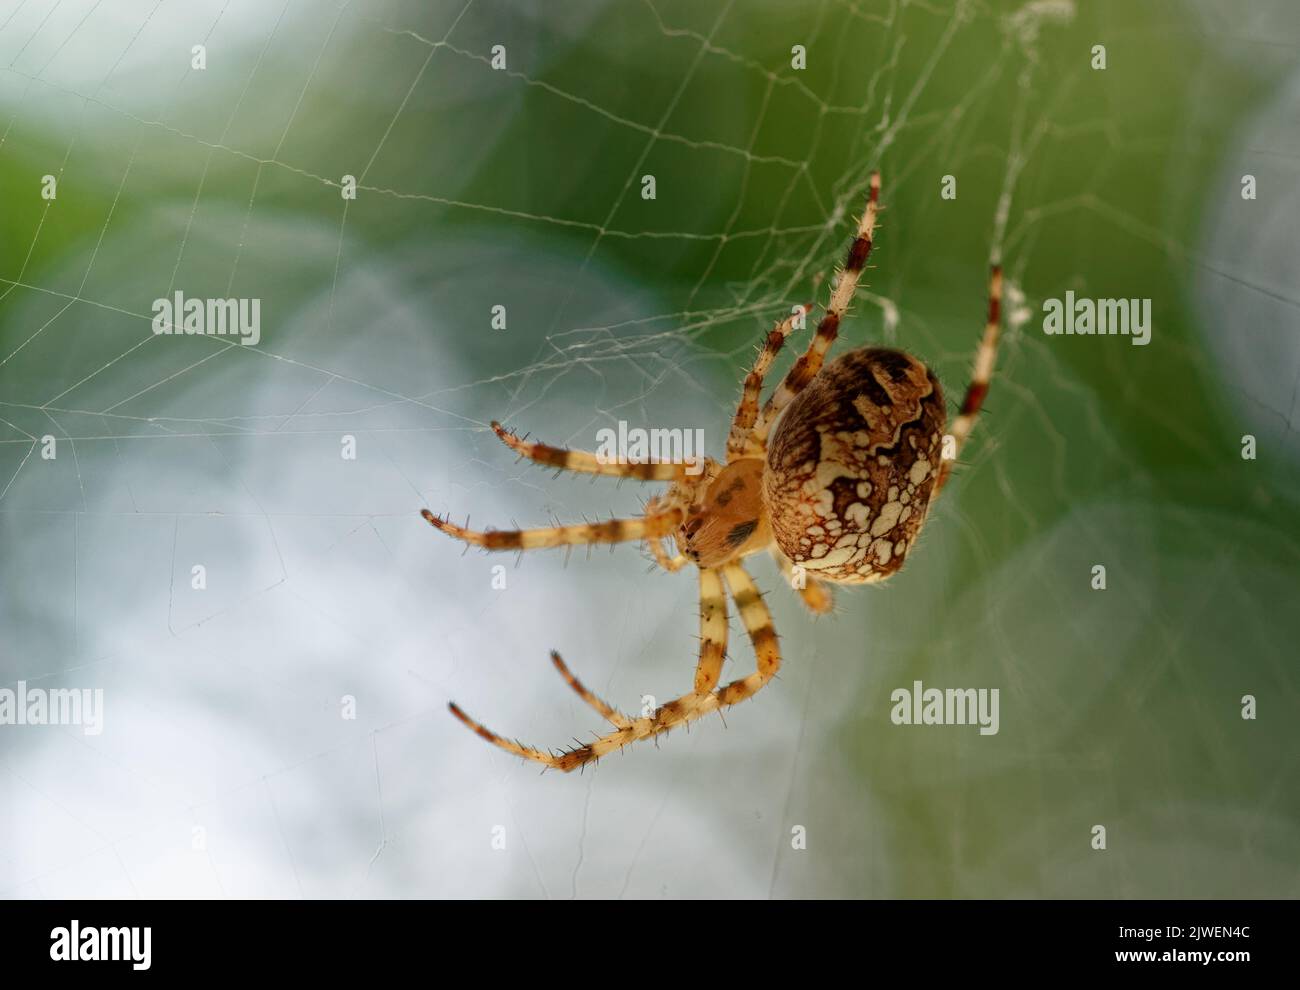 Araneus diadematus spider hunting in its web, macro shot Stock Photo